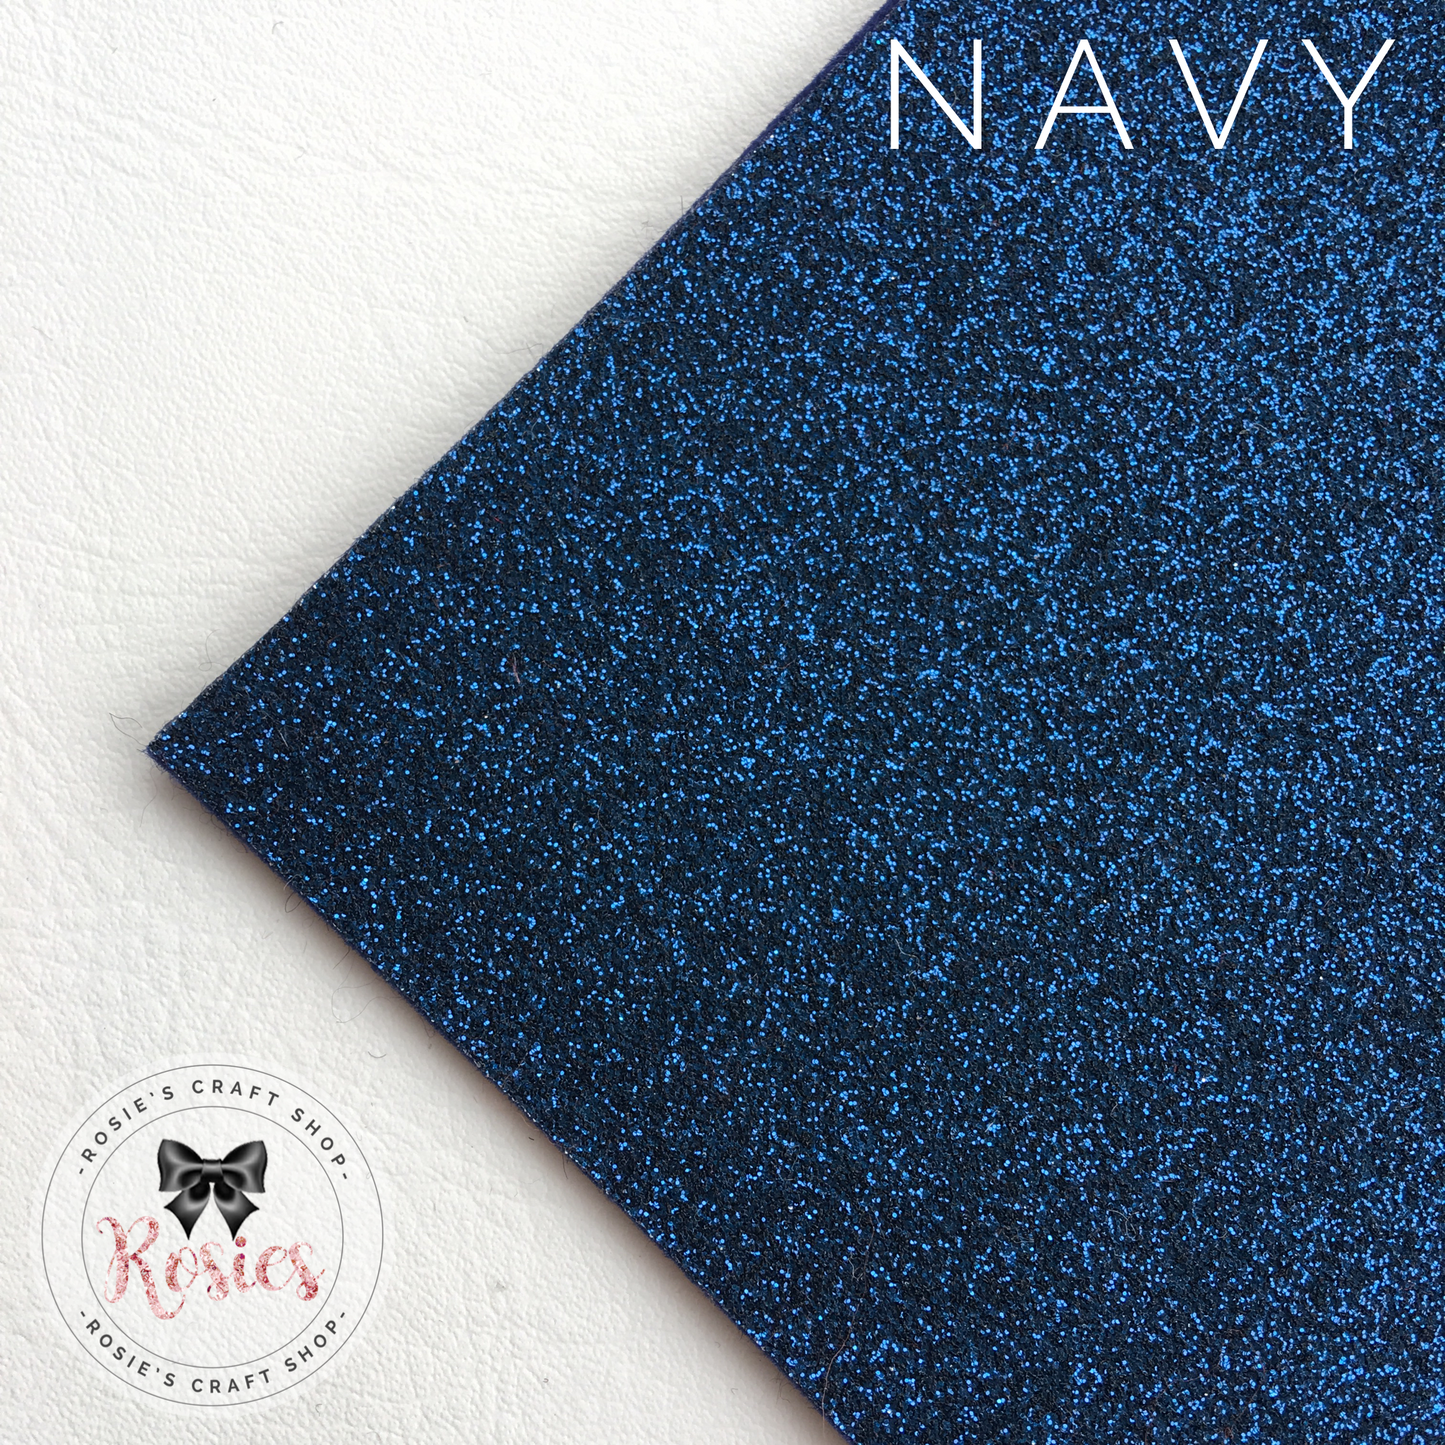 Navy Blue Glitter Iron On Vinyl HTV - Rosie's Craft Shop Ltd